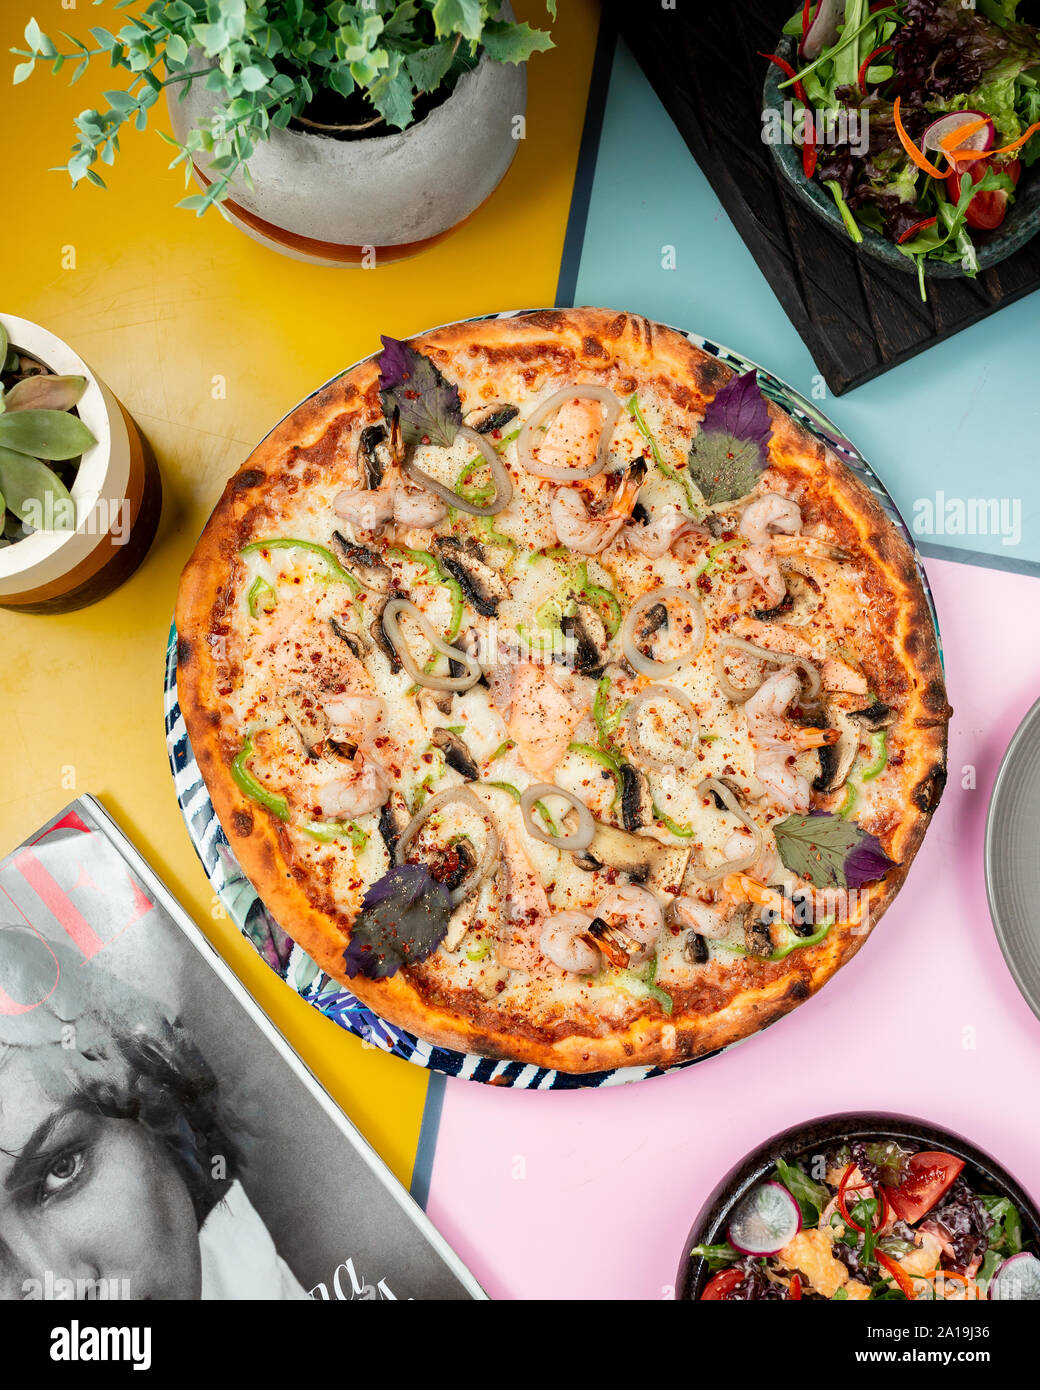 Funghi polo Pizza mit Huhn und Pilzen Stockfotografie - Alamy